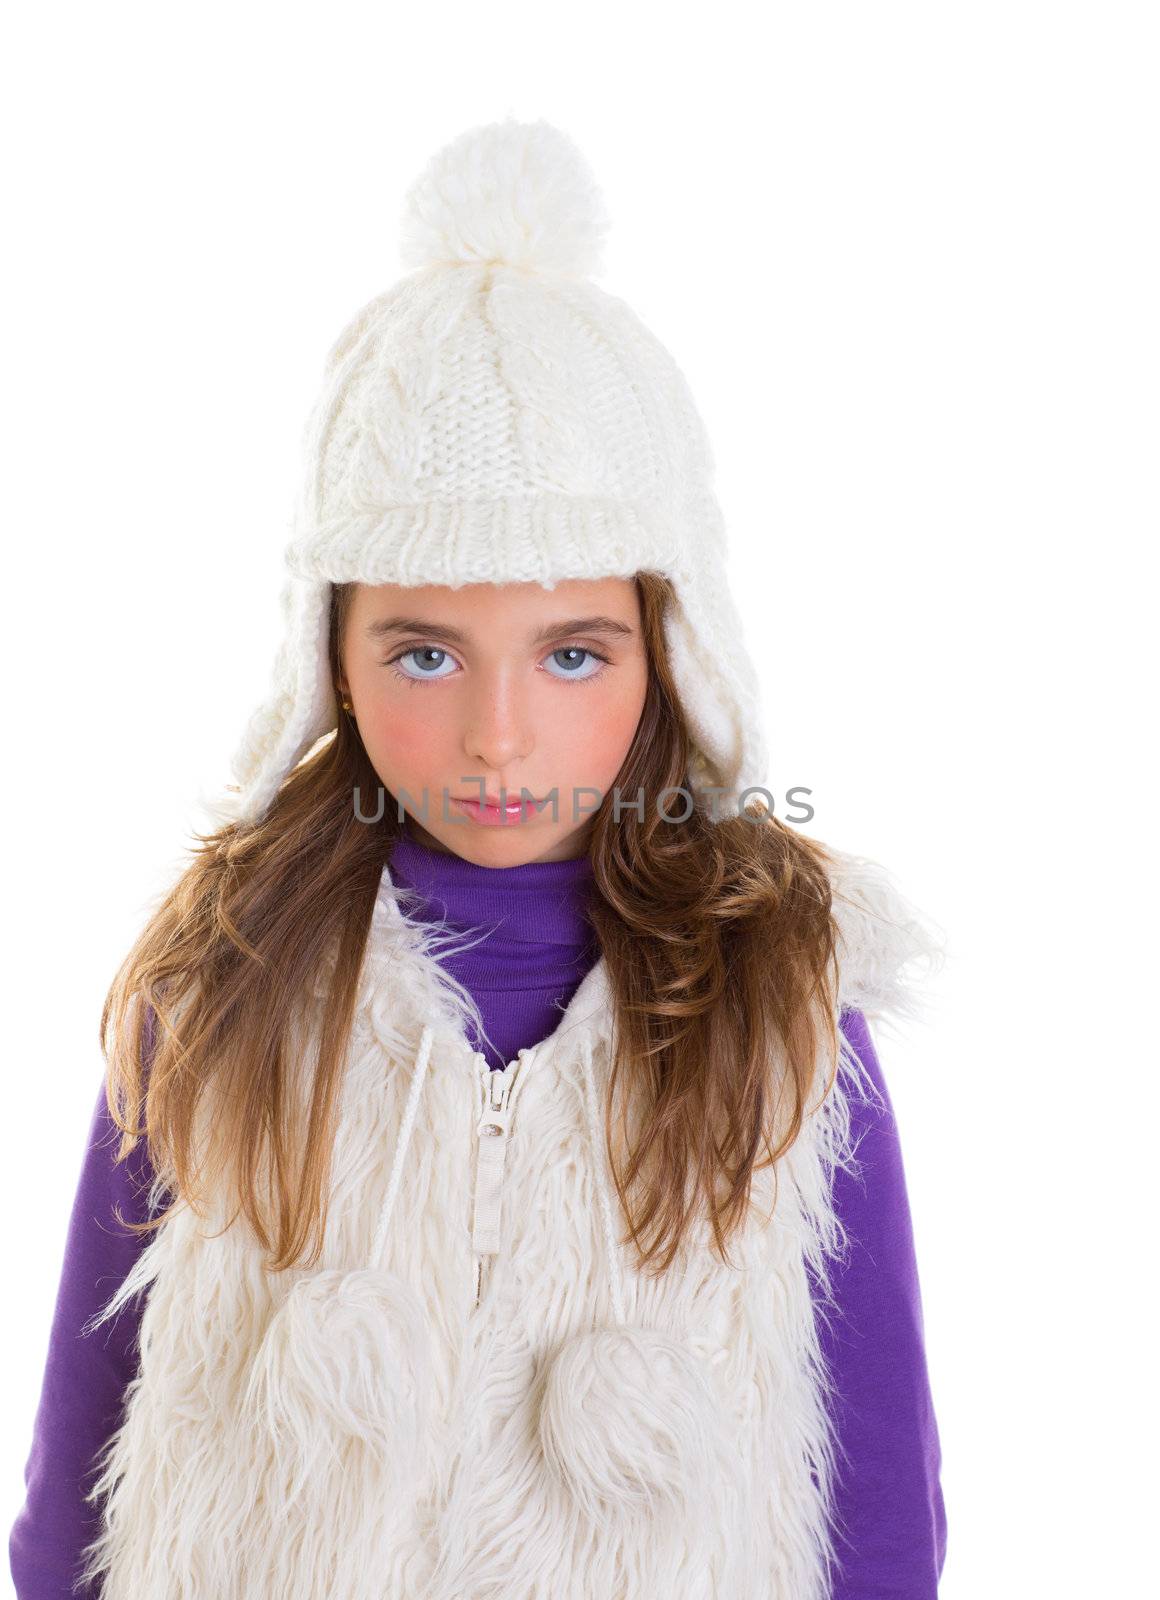 blue eyes child kid girl with white winter cap fur by lunamarina